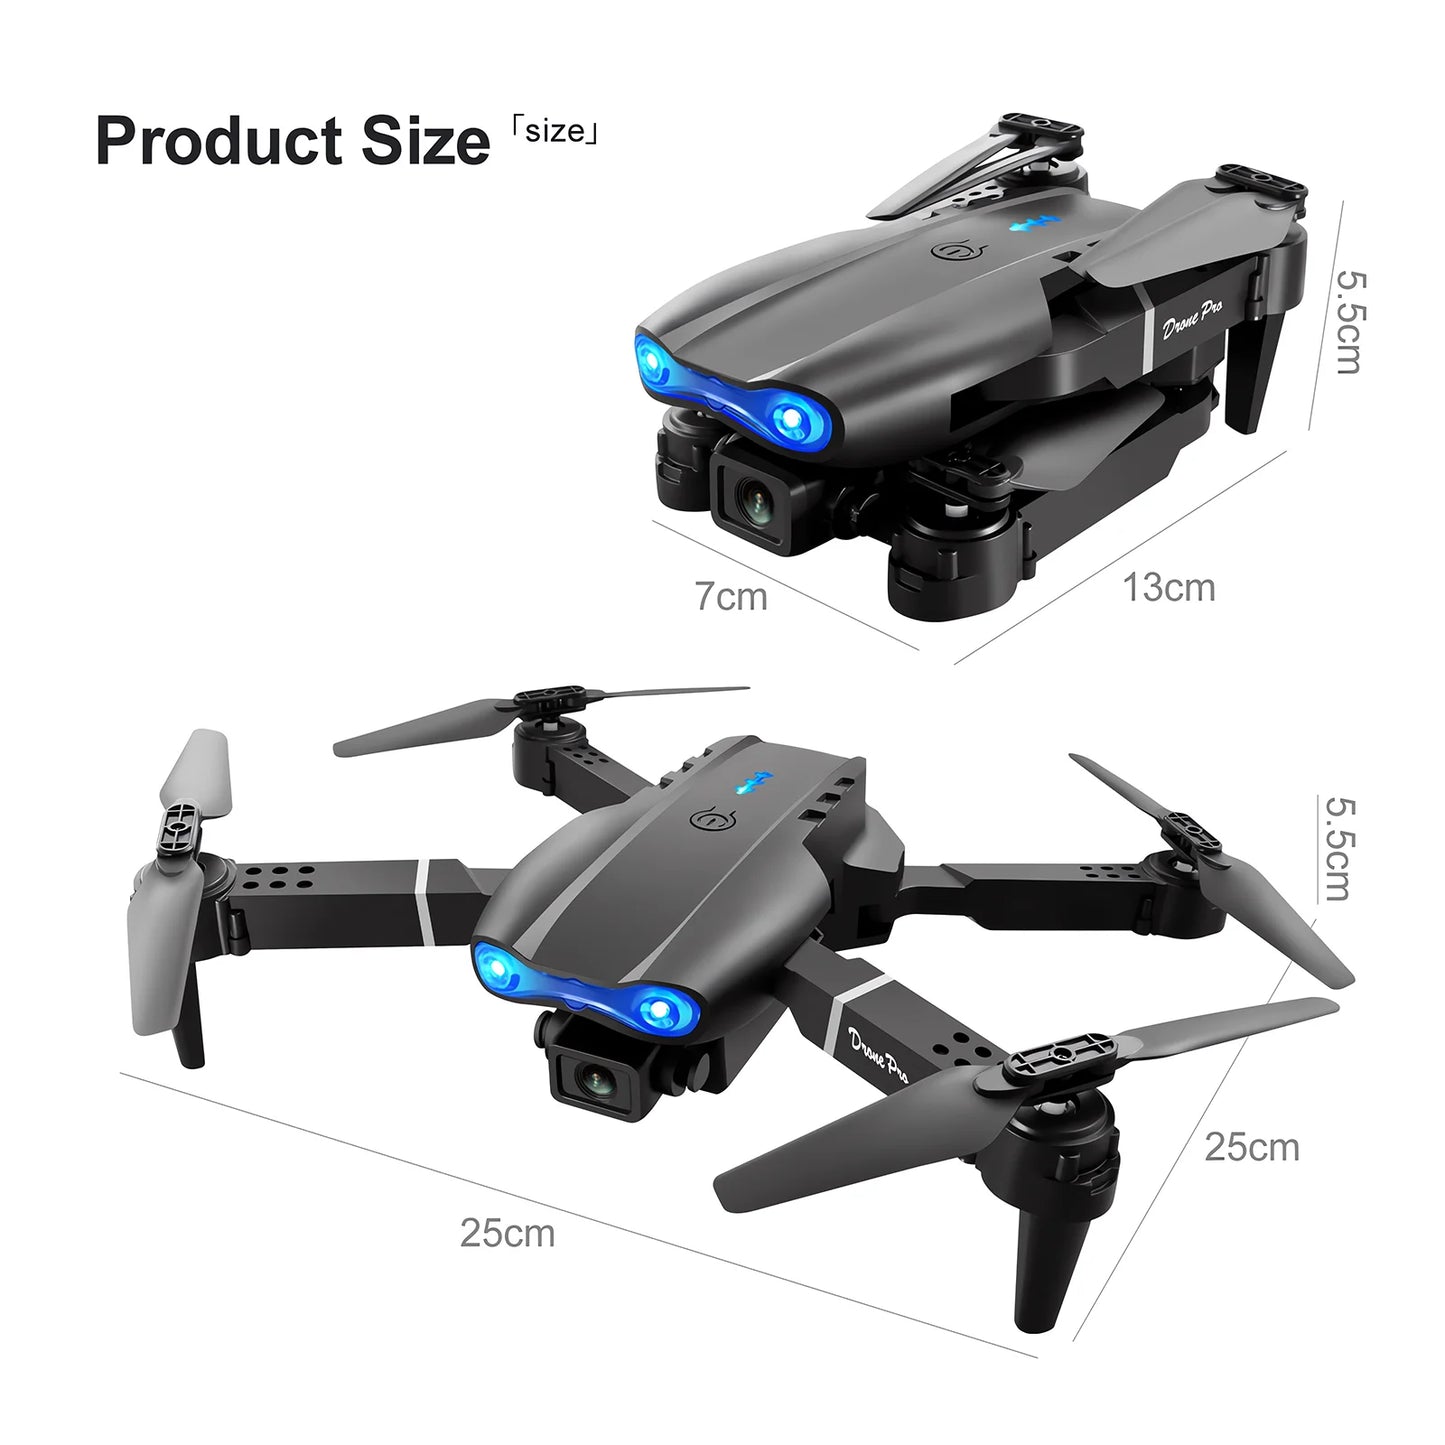 Foldable E99Pro RC Drone + 4K Professional + Wide Angle + Dual HD Camera + 5G WIFI